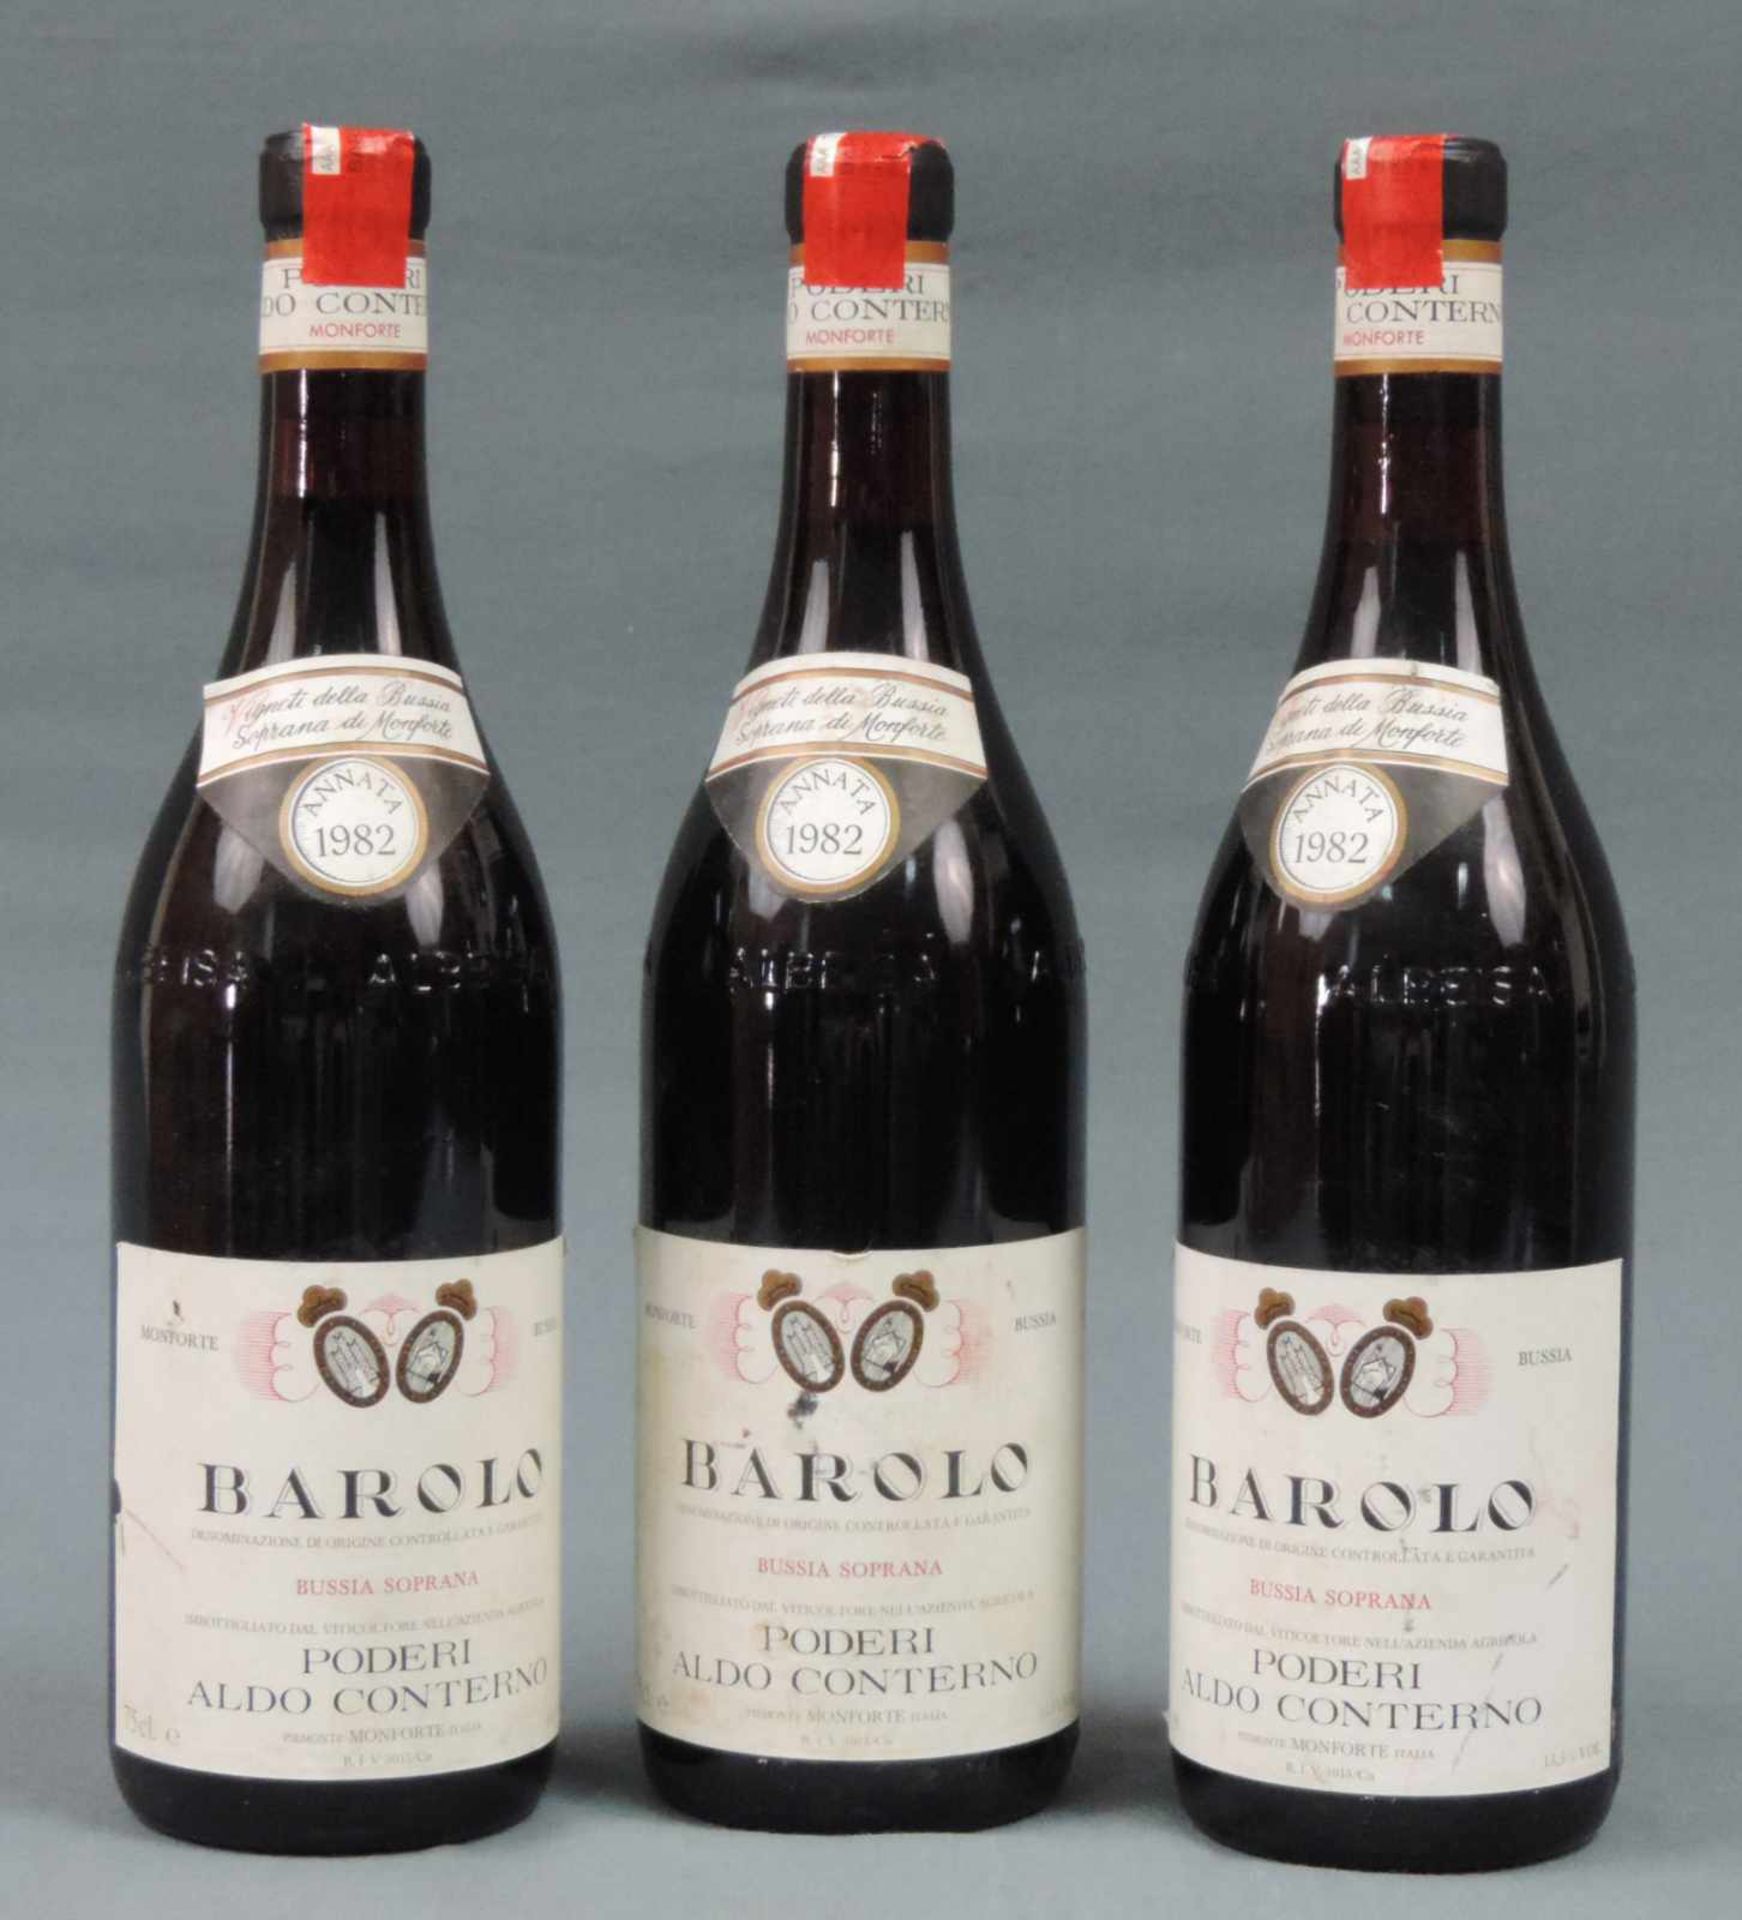 1982 Barolo, DOCG, Italien. Rotwein. 3 ganze Flaschen. 75 cl. 13,5 % Vol. Gute Erscheinung. 1982